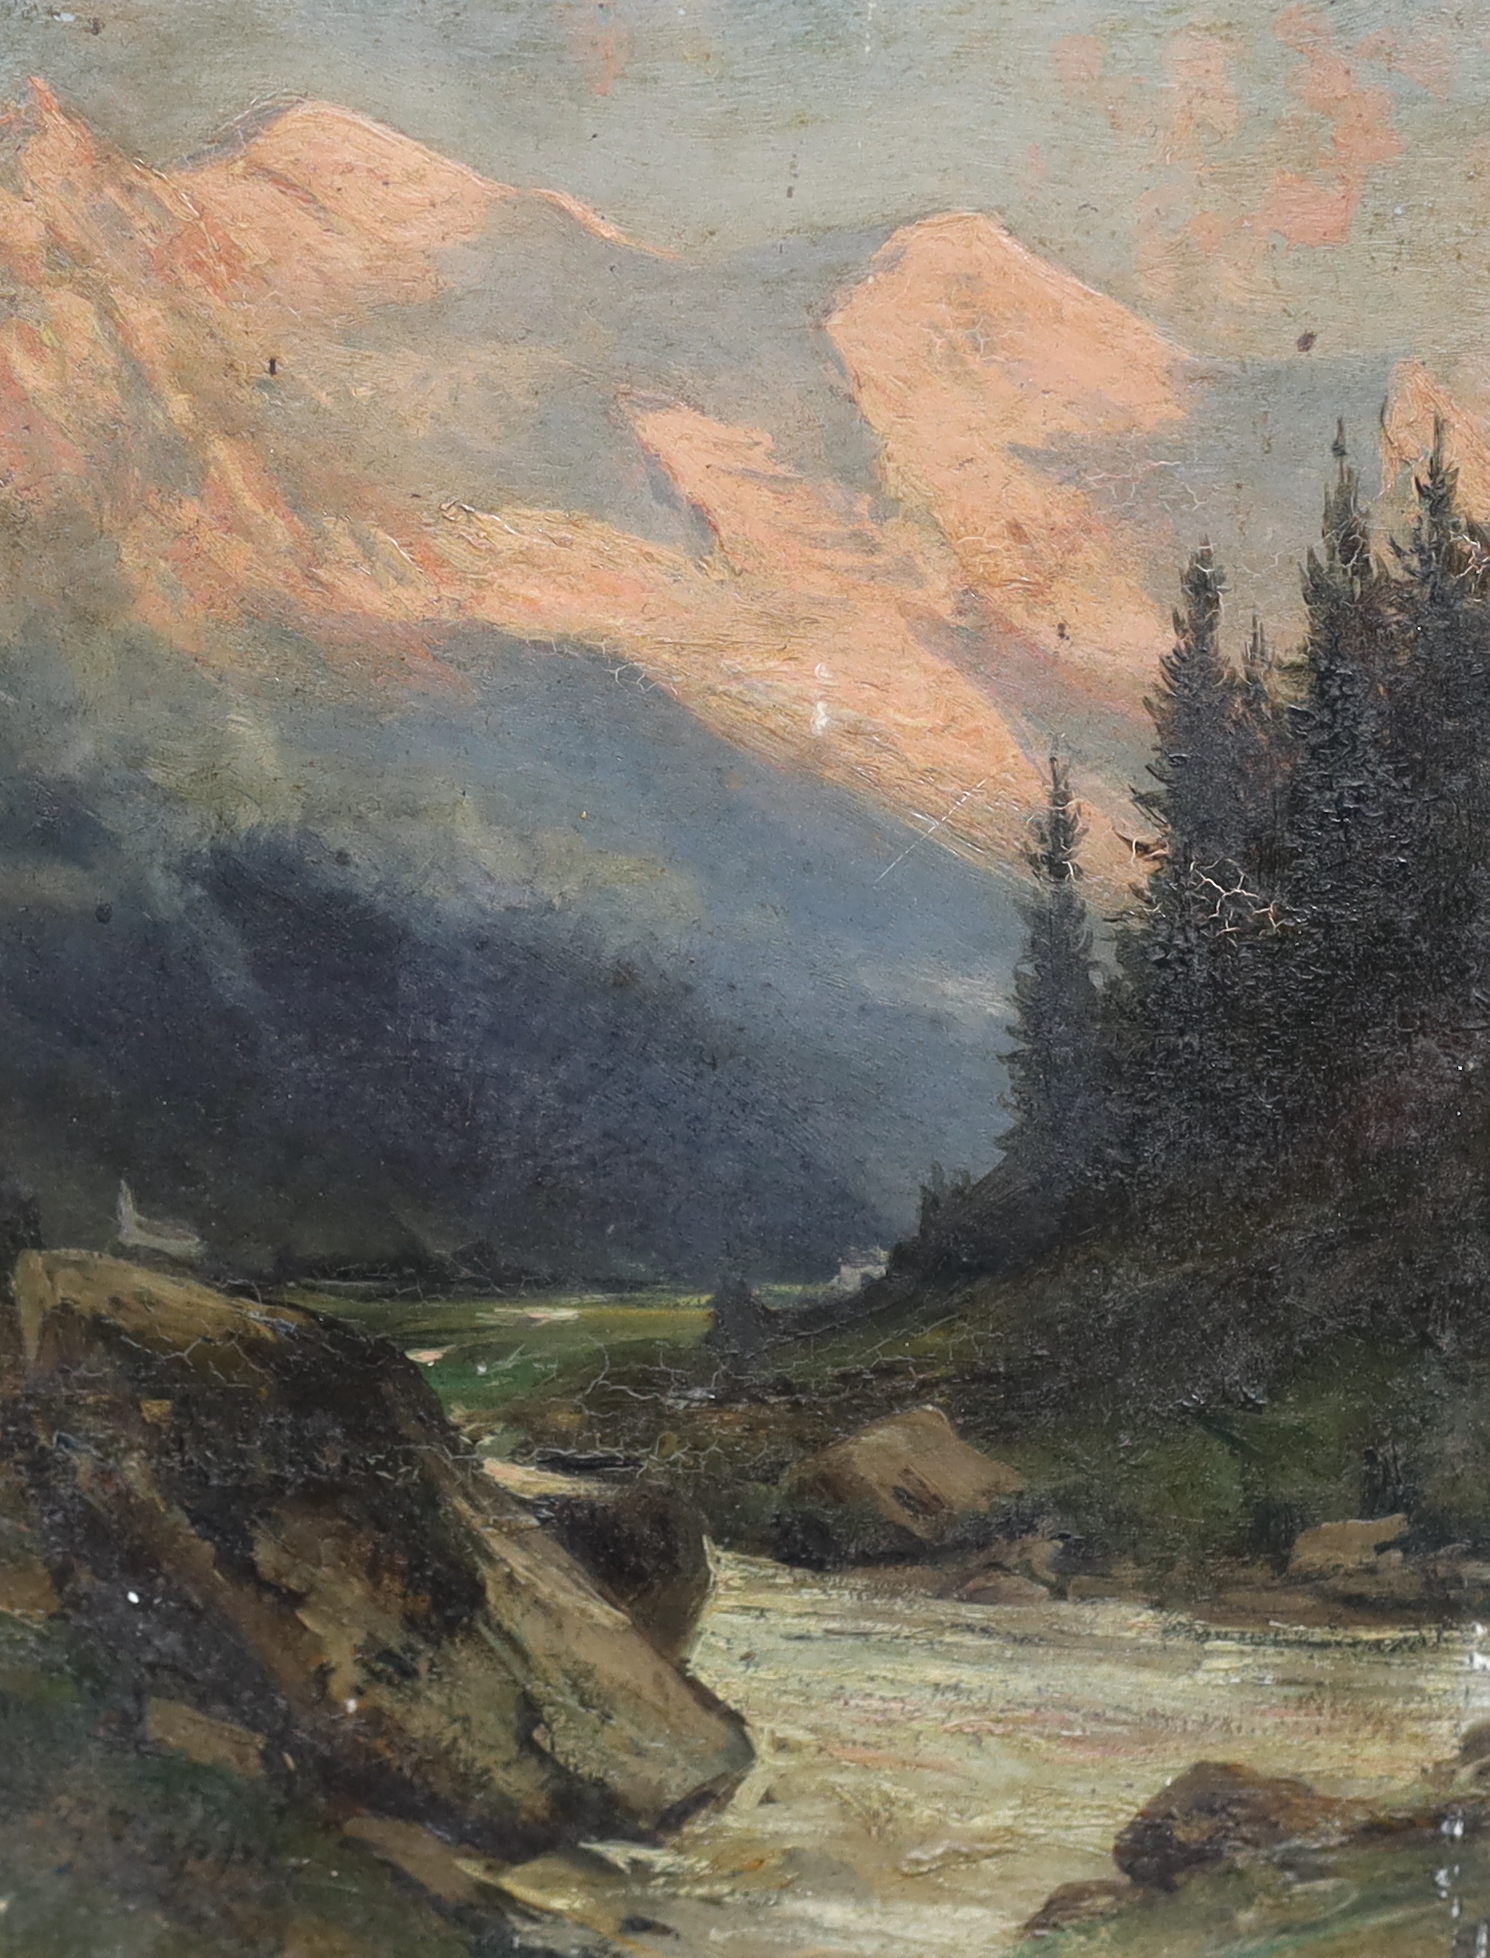 Gabriel Loppé (French, 1825-1913), Mont Blanc from Chamonix, oil on panel, 26 x 19.5cm, unframed